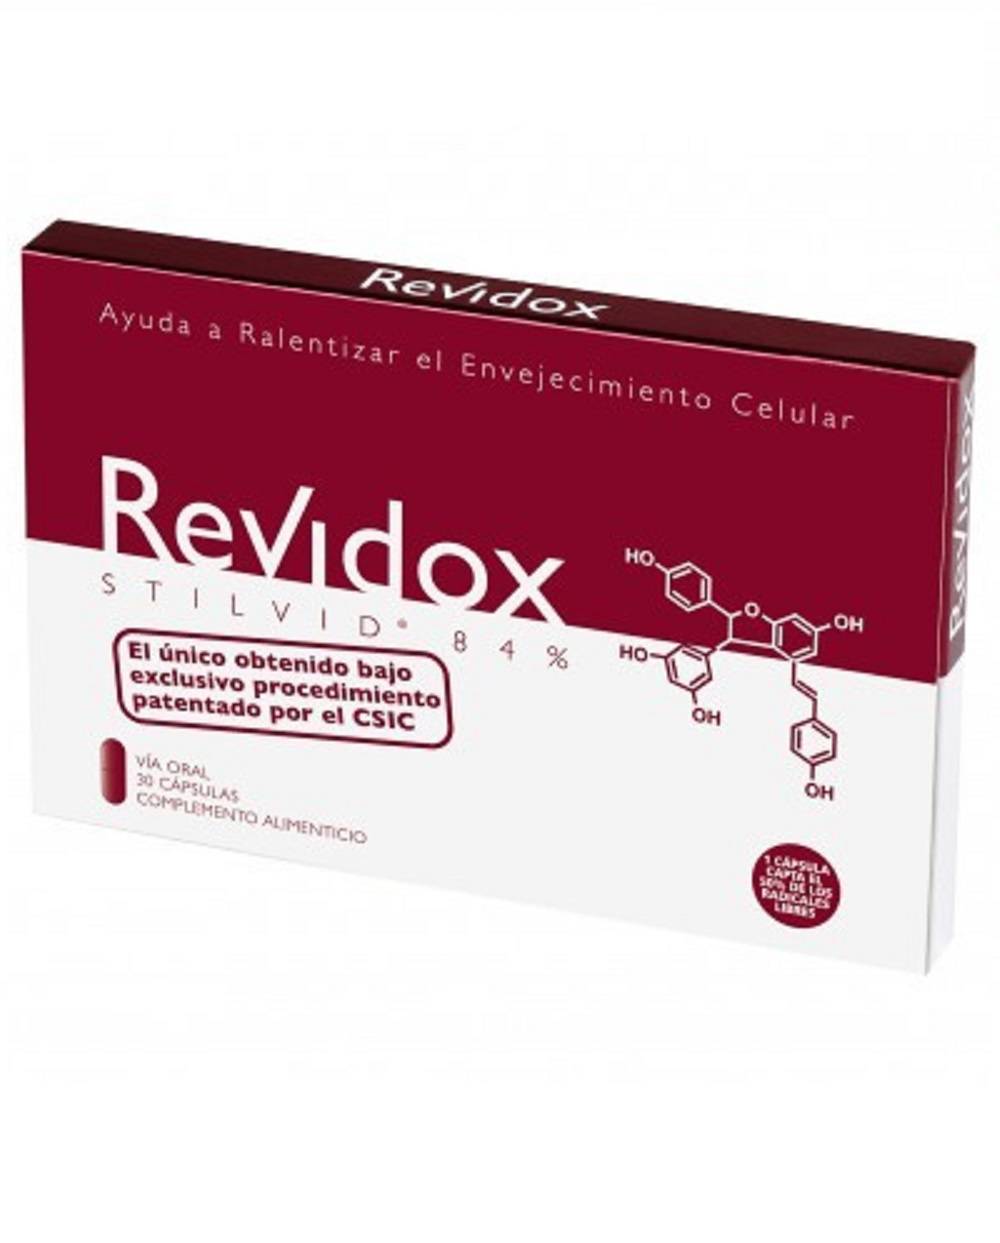 Revidox - 30 cápsulas n